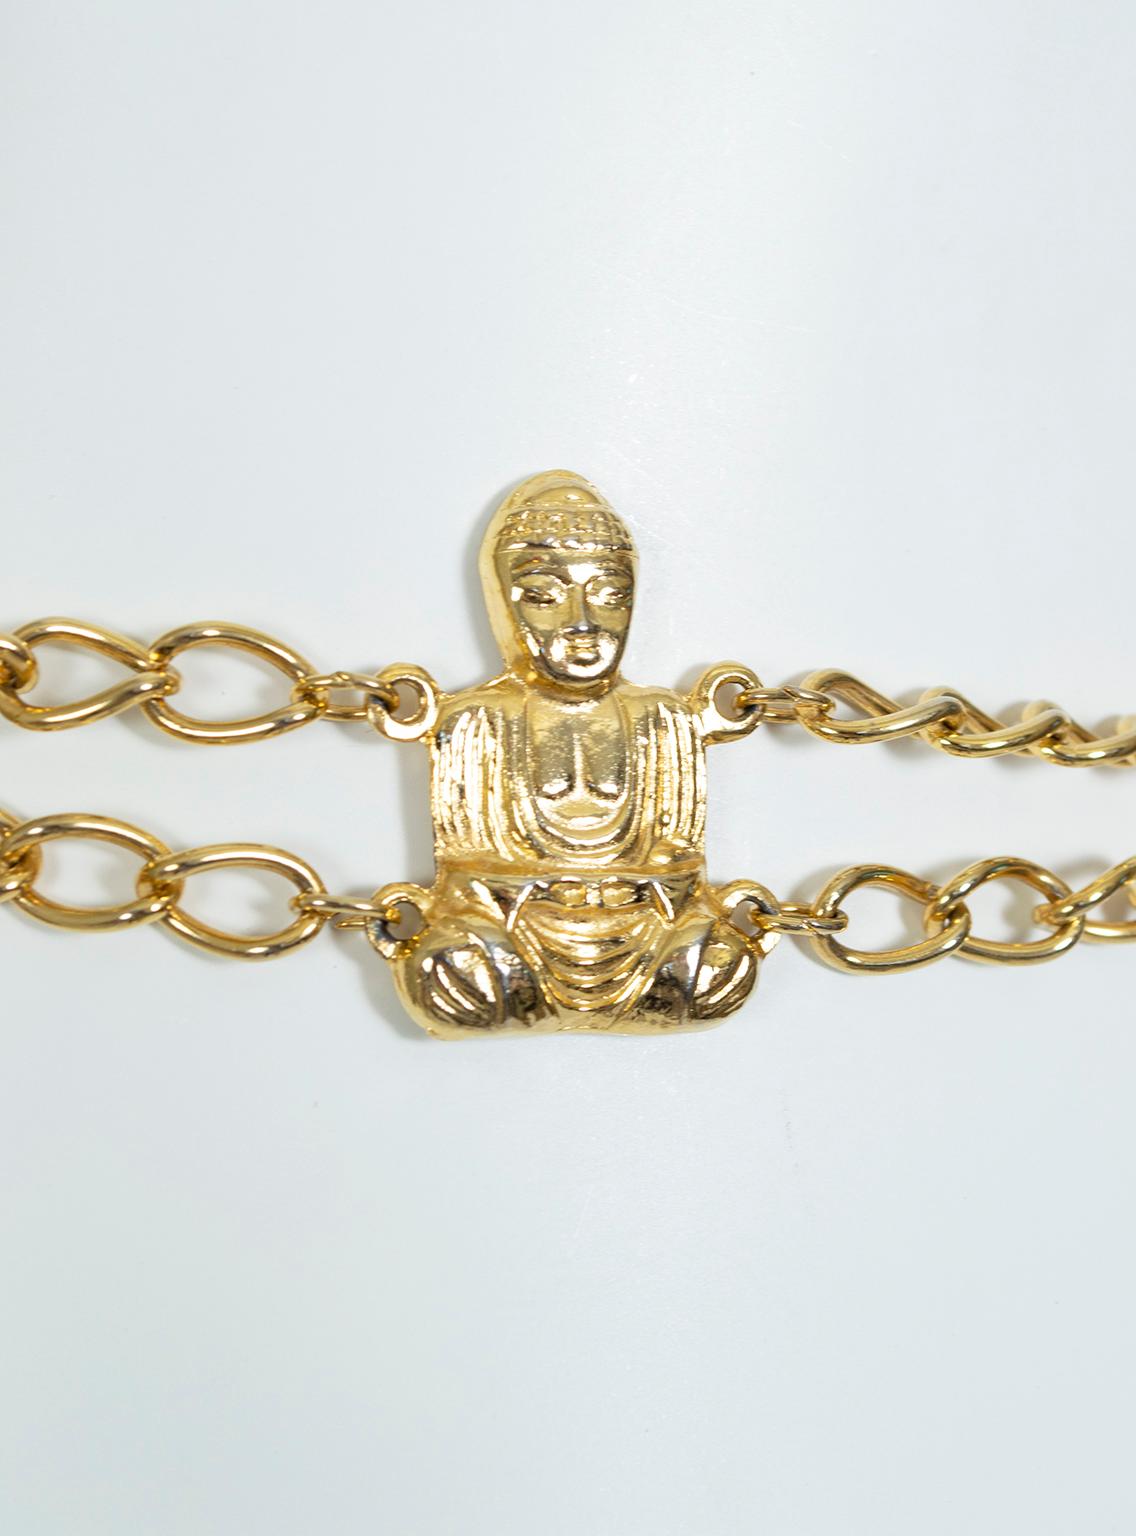 Beige “Golden Turtle” Buddhist Chain Belt with Dangling Turtle Talisman – O/S, 1980s